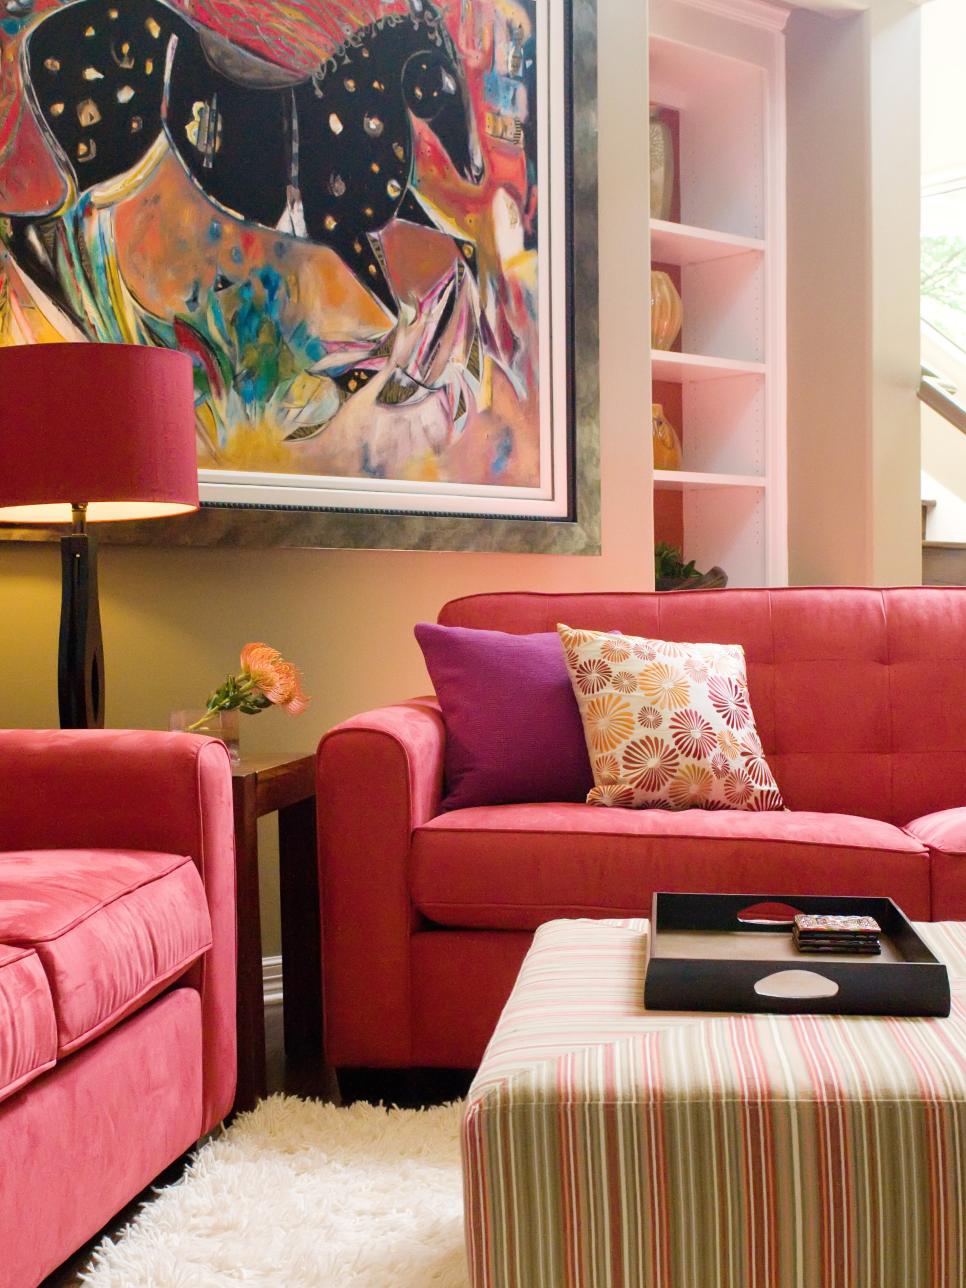 25 Beautiful Red Living Room Design Ideas - Decoration Love